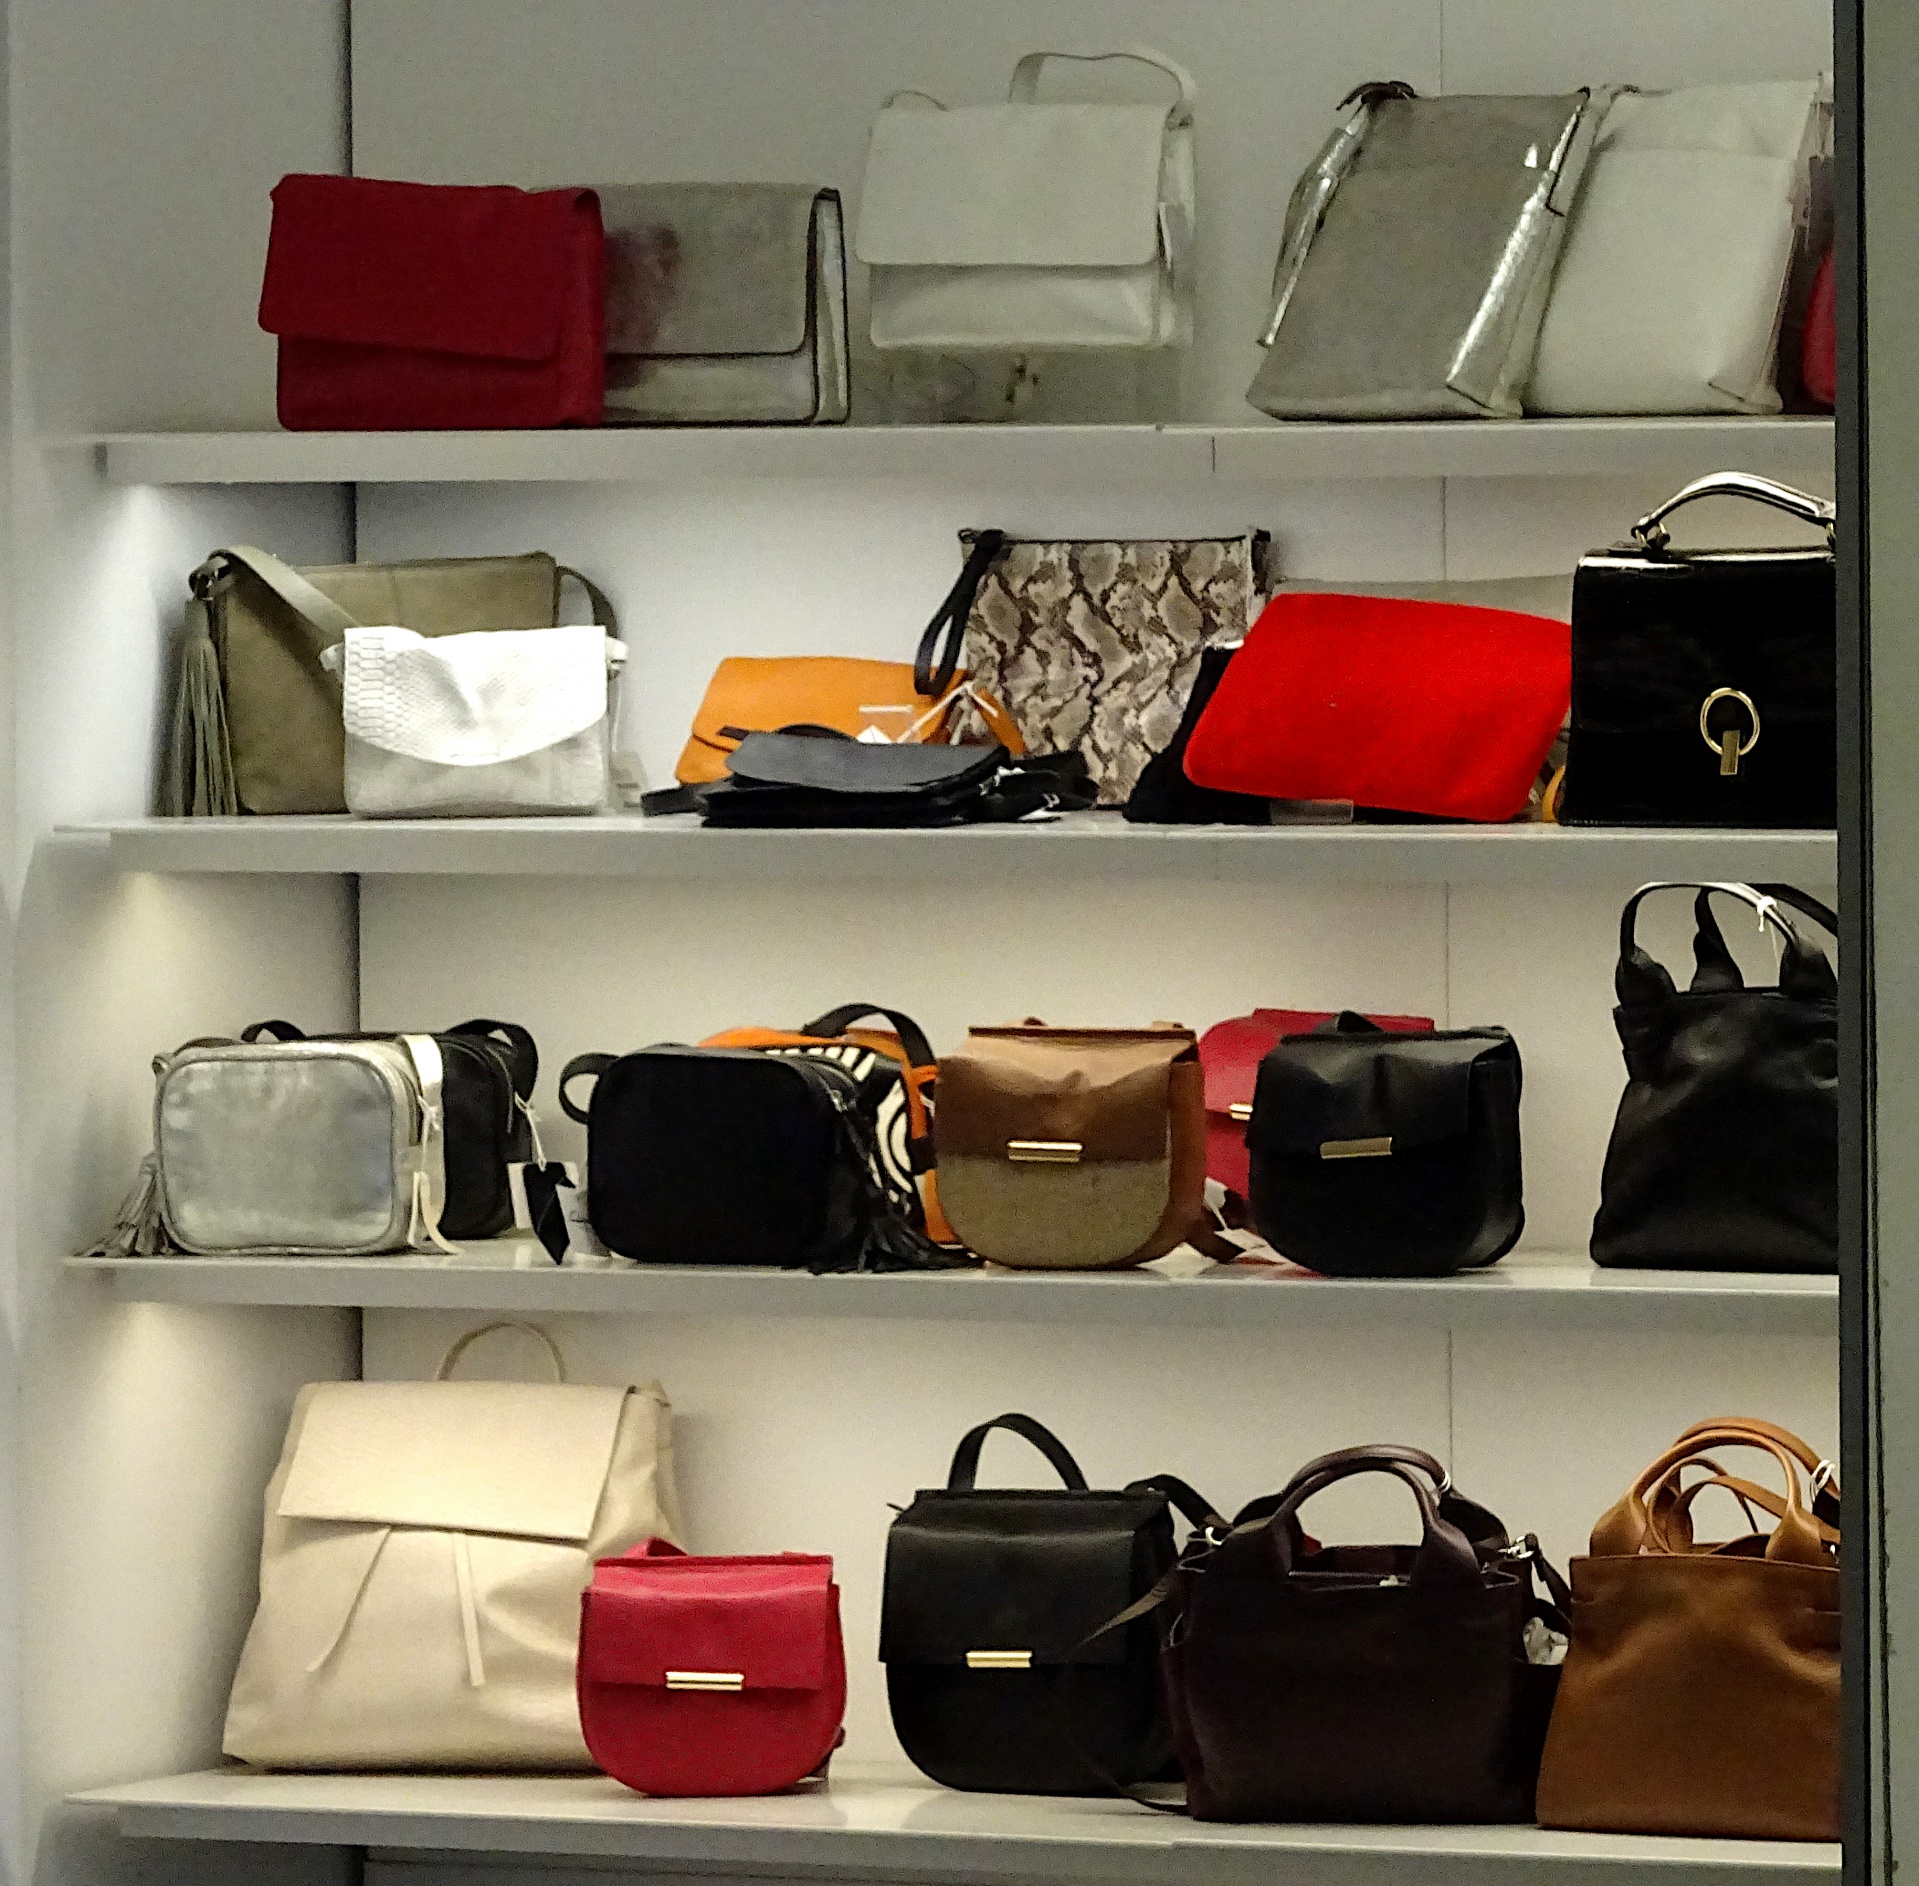 Ladies Handbags On Shelves